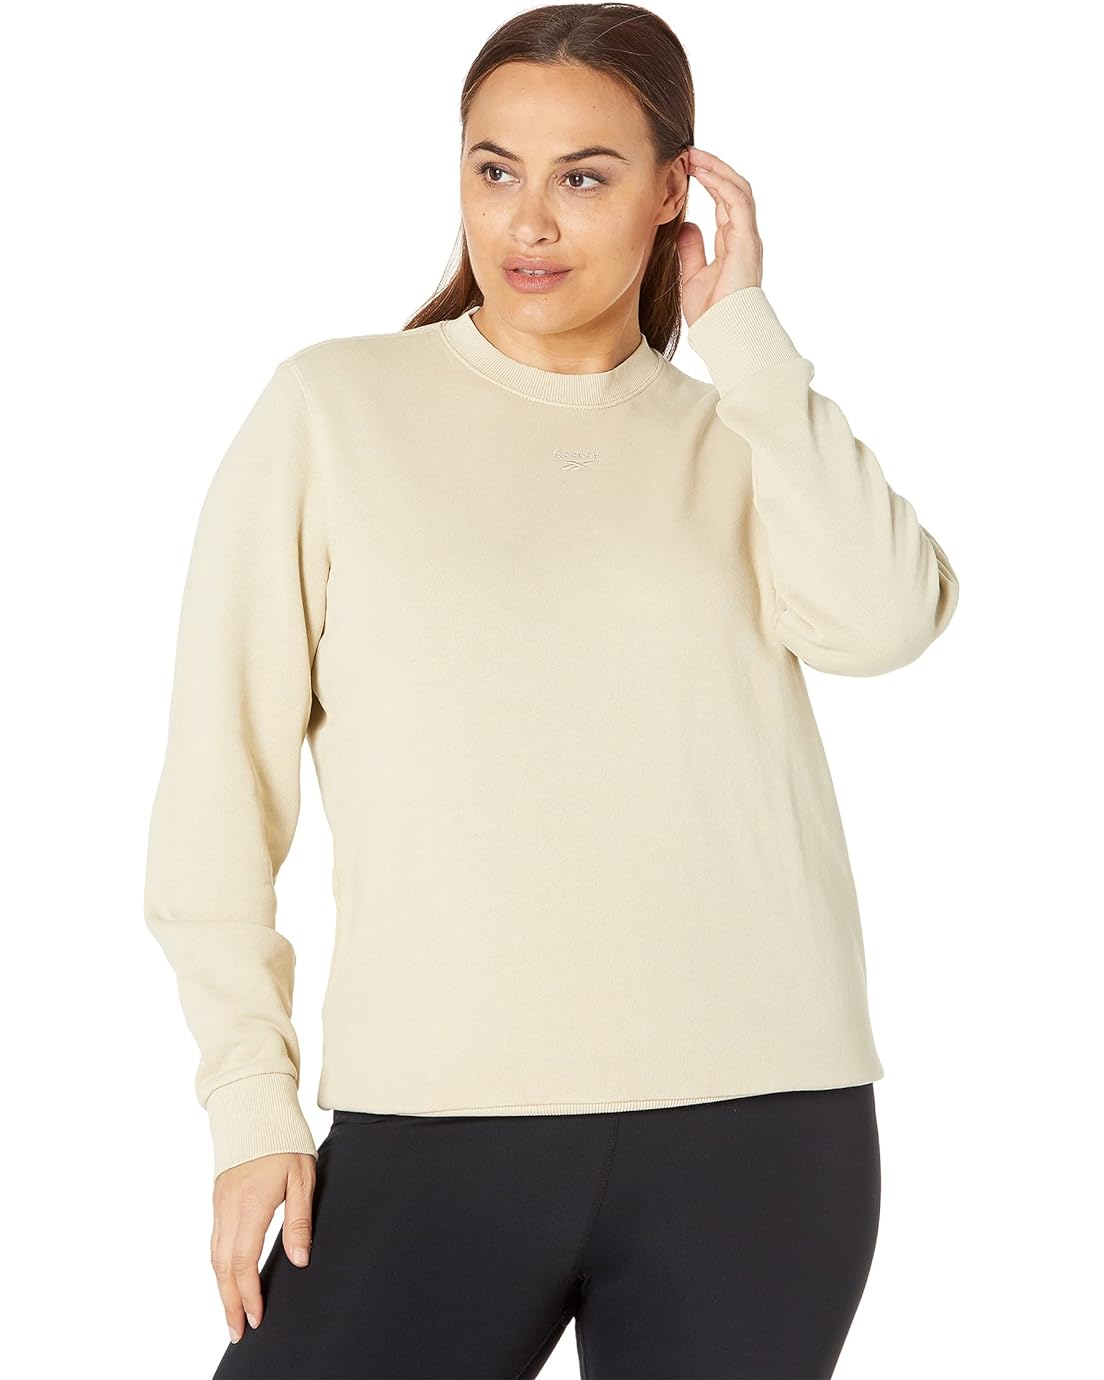 Reebok Plus Size Classics Sweatshirt